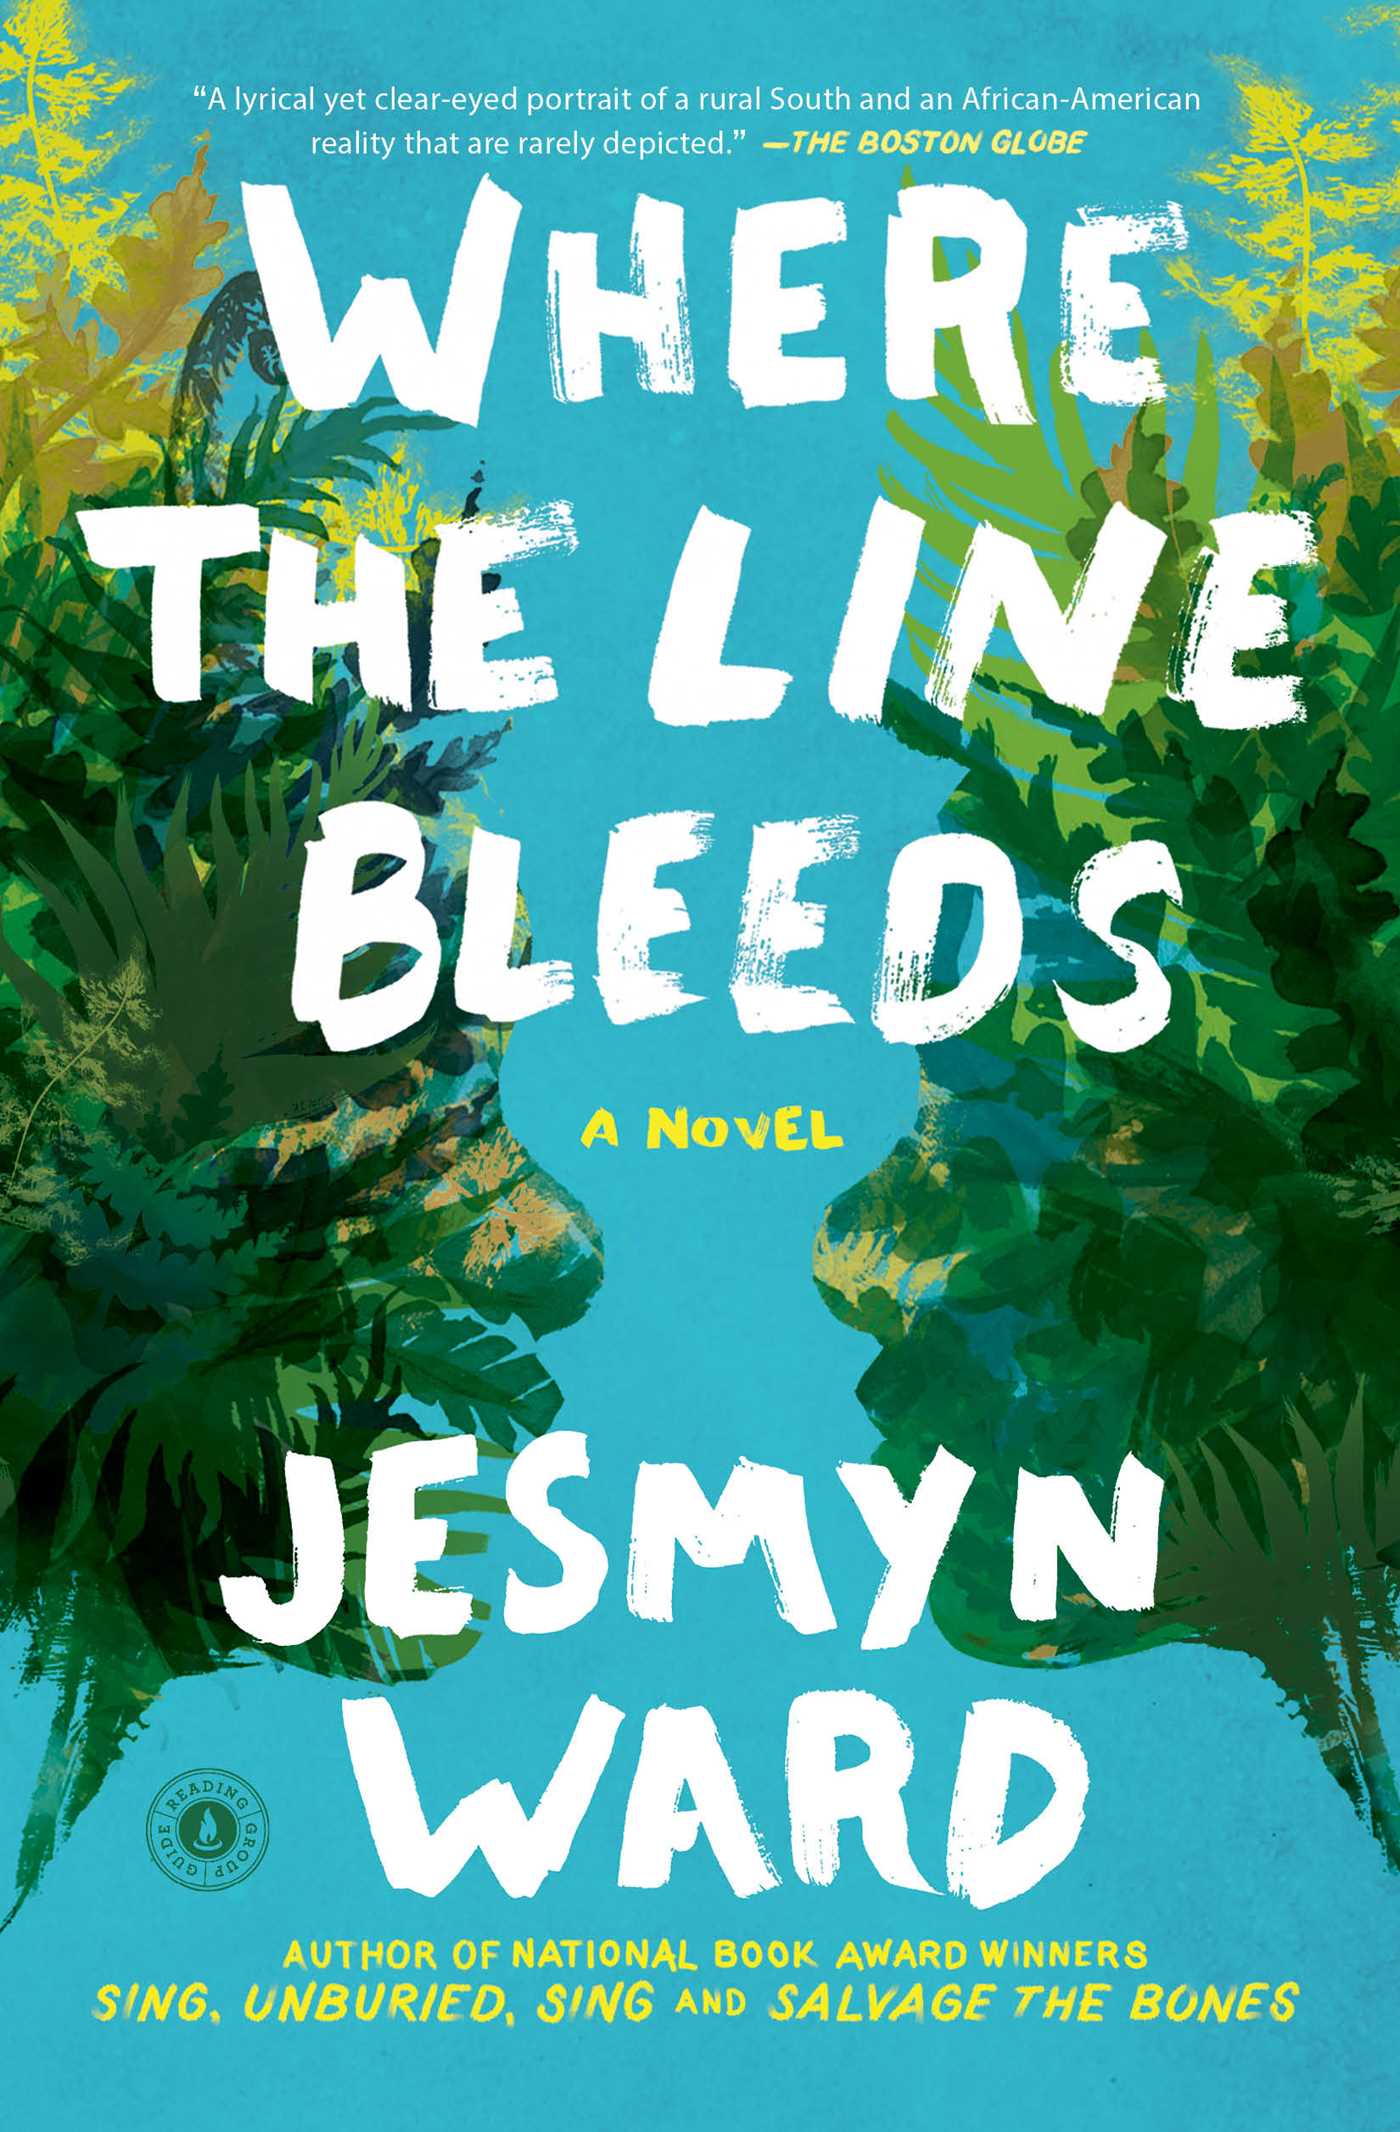 Where the Line Bleeds by Jesmyn Ward